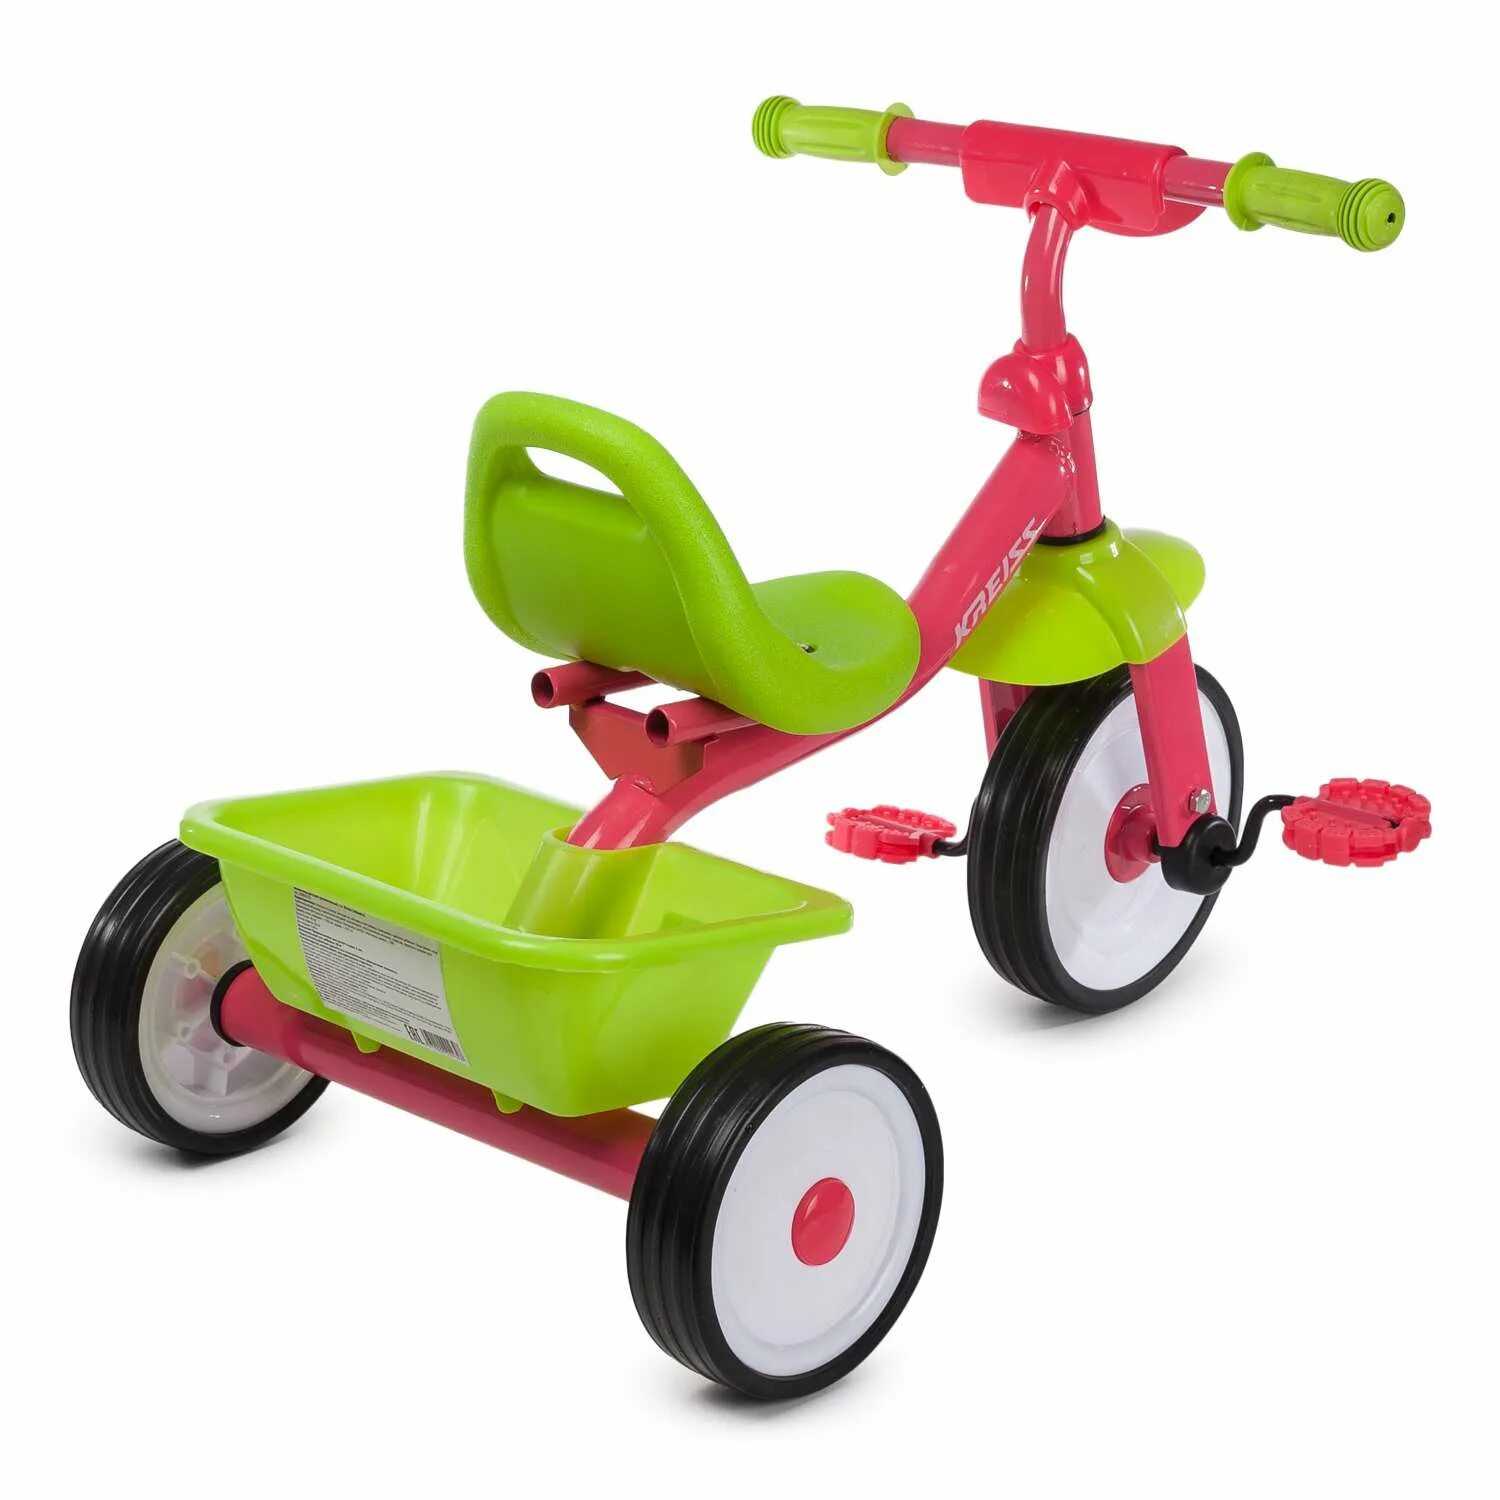 Детский велосипед Kreiss трехколесный. Трехколесный велосипед Kreiss зеленый. Kreiss велосипед трехколесный розовый. Велосипед детский Kreiss 326 трехколесный. Kreiss велосипед трехколесный с ручкой